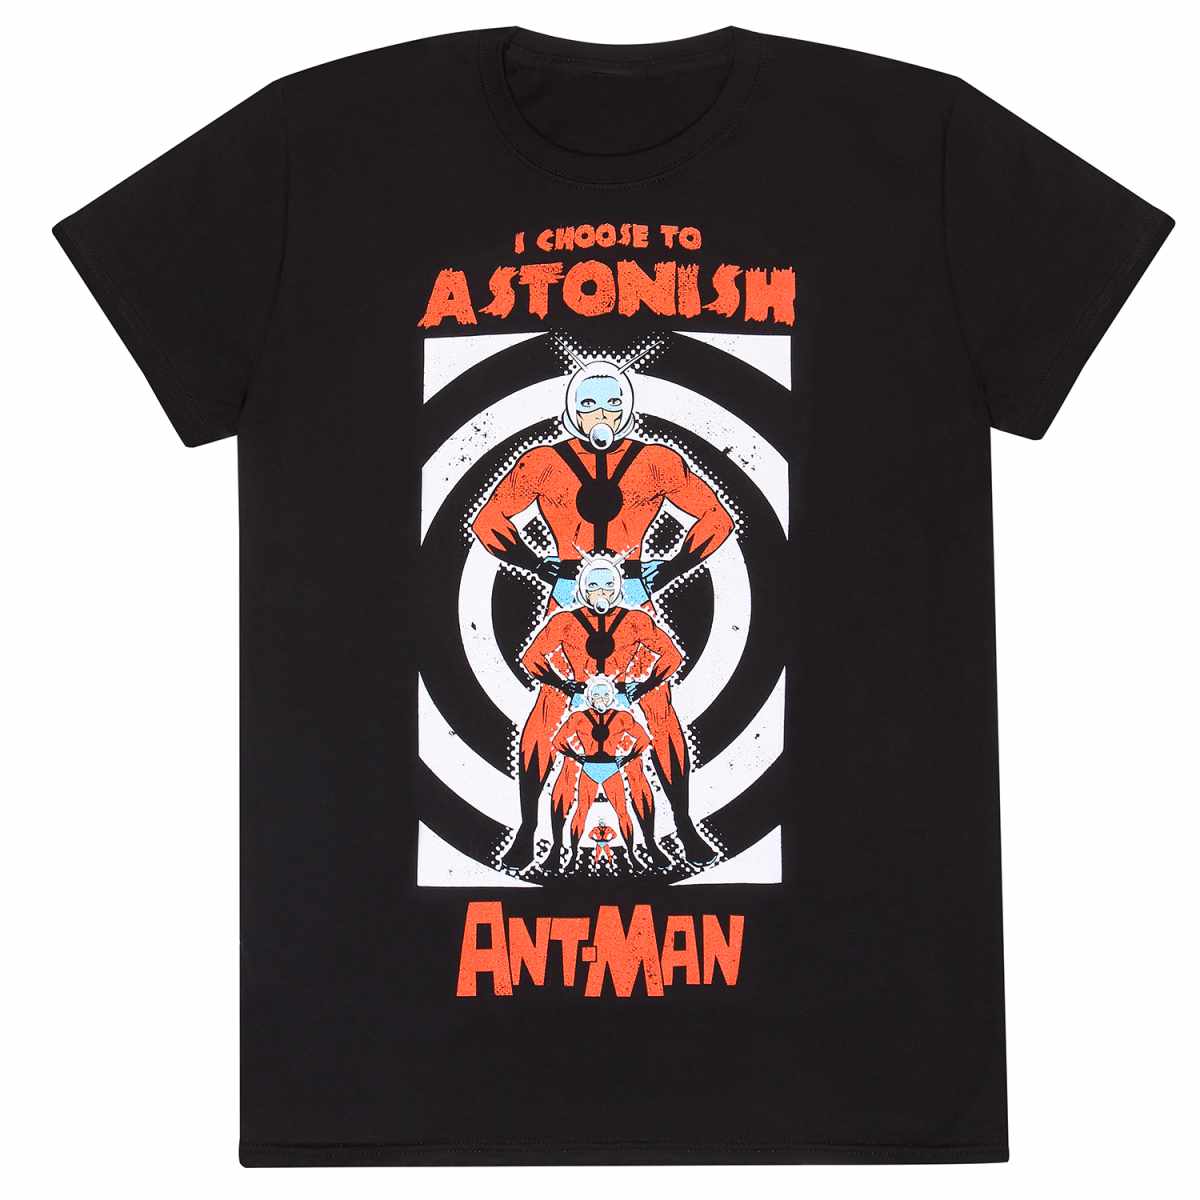 Marvel Comics Astonish T-Shirt